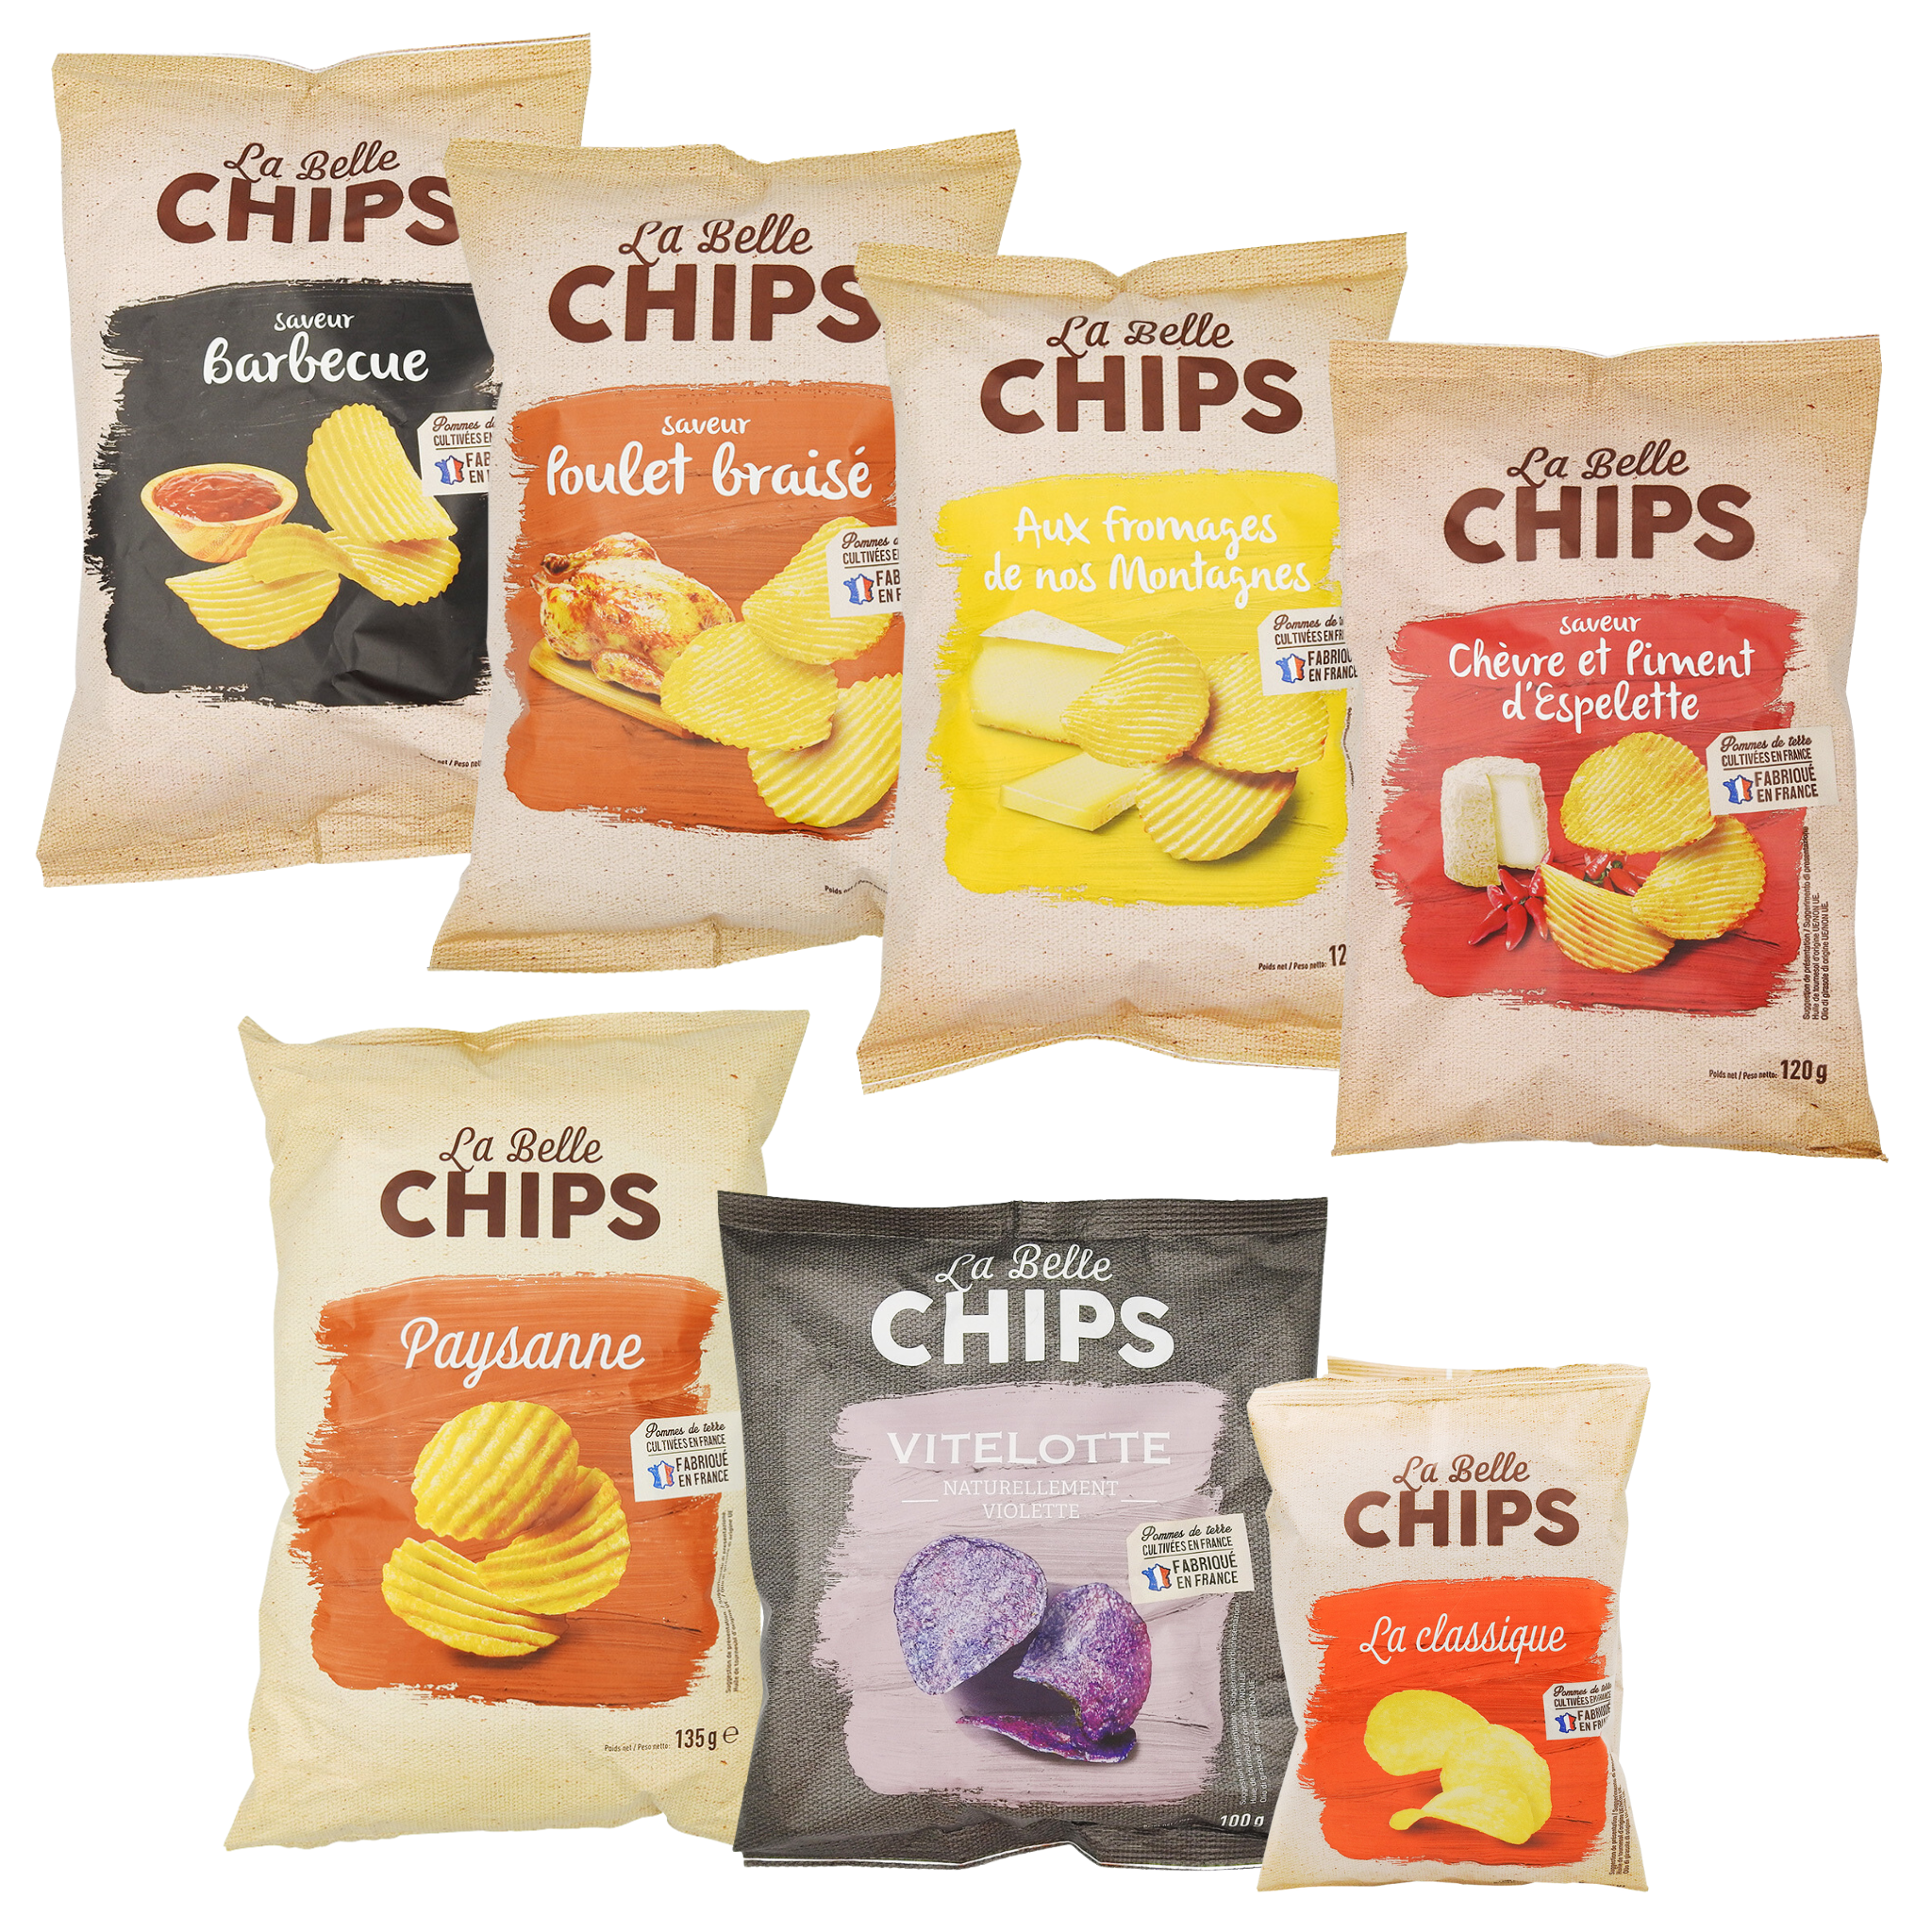 Les chips La Belle Chips